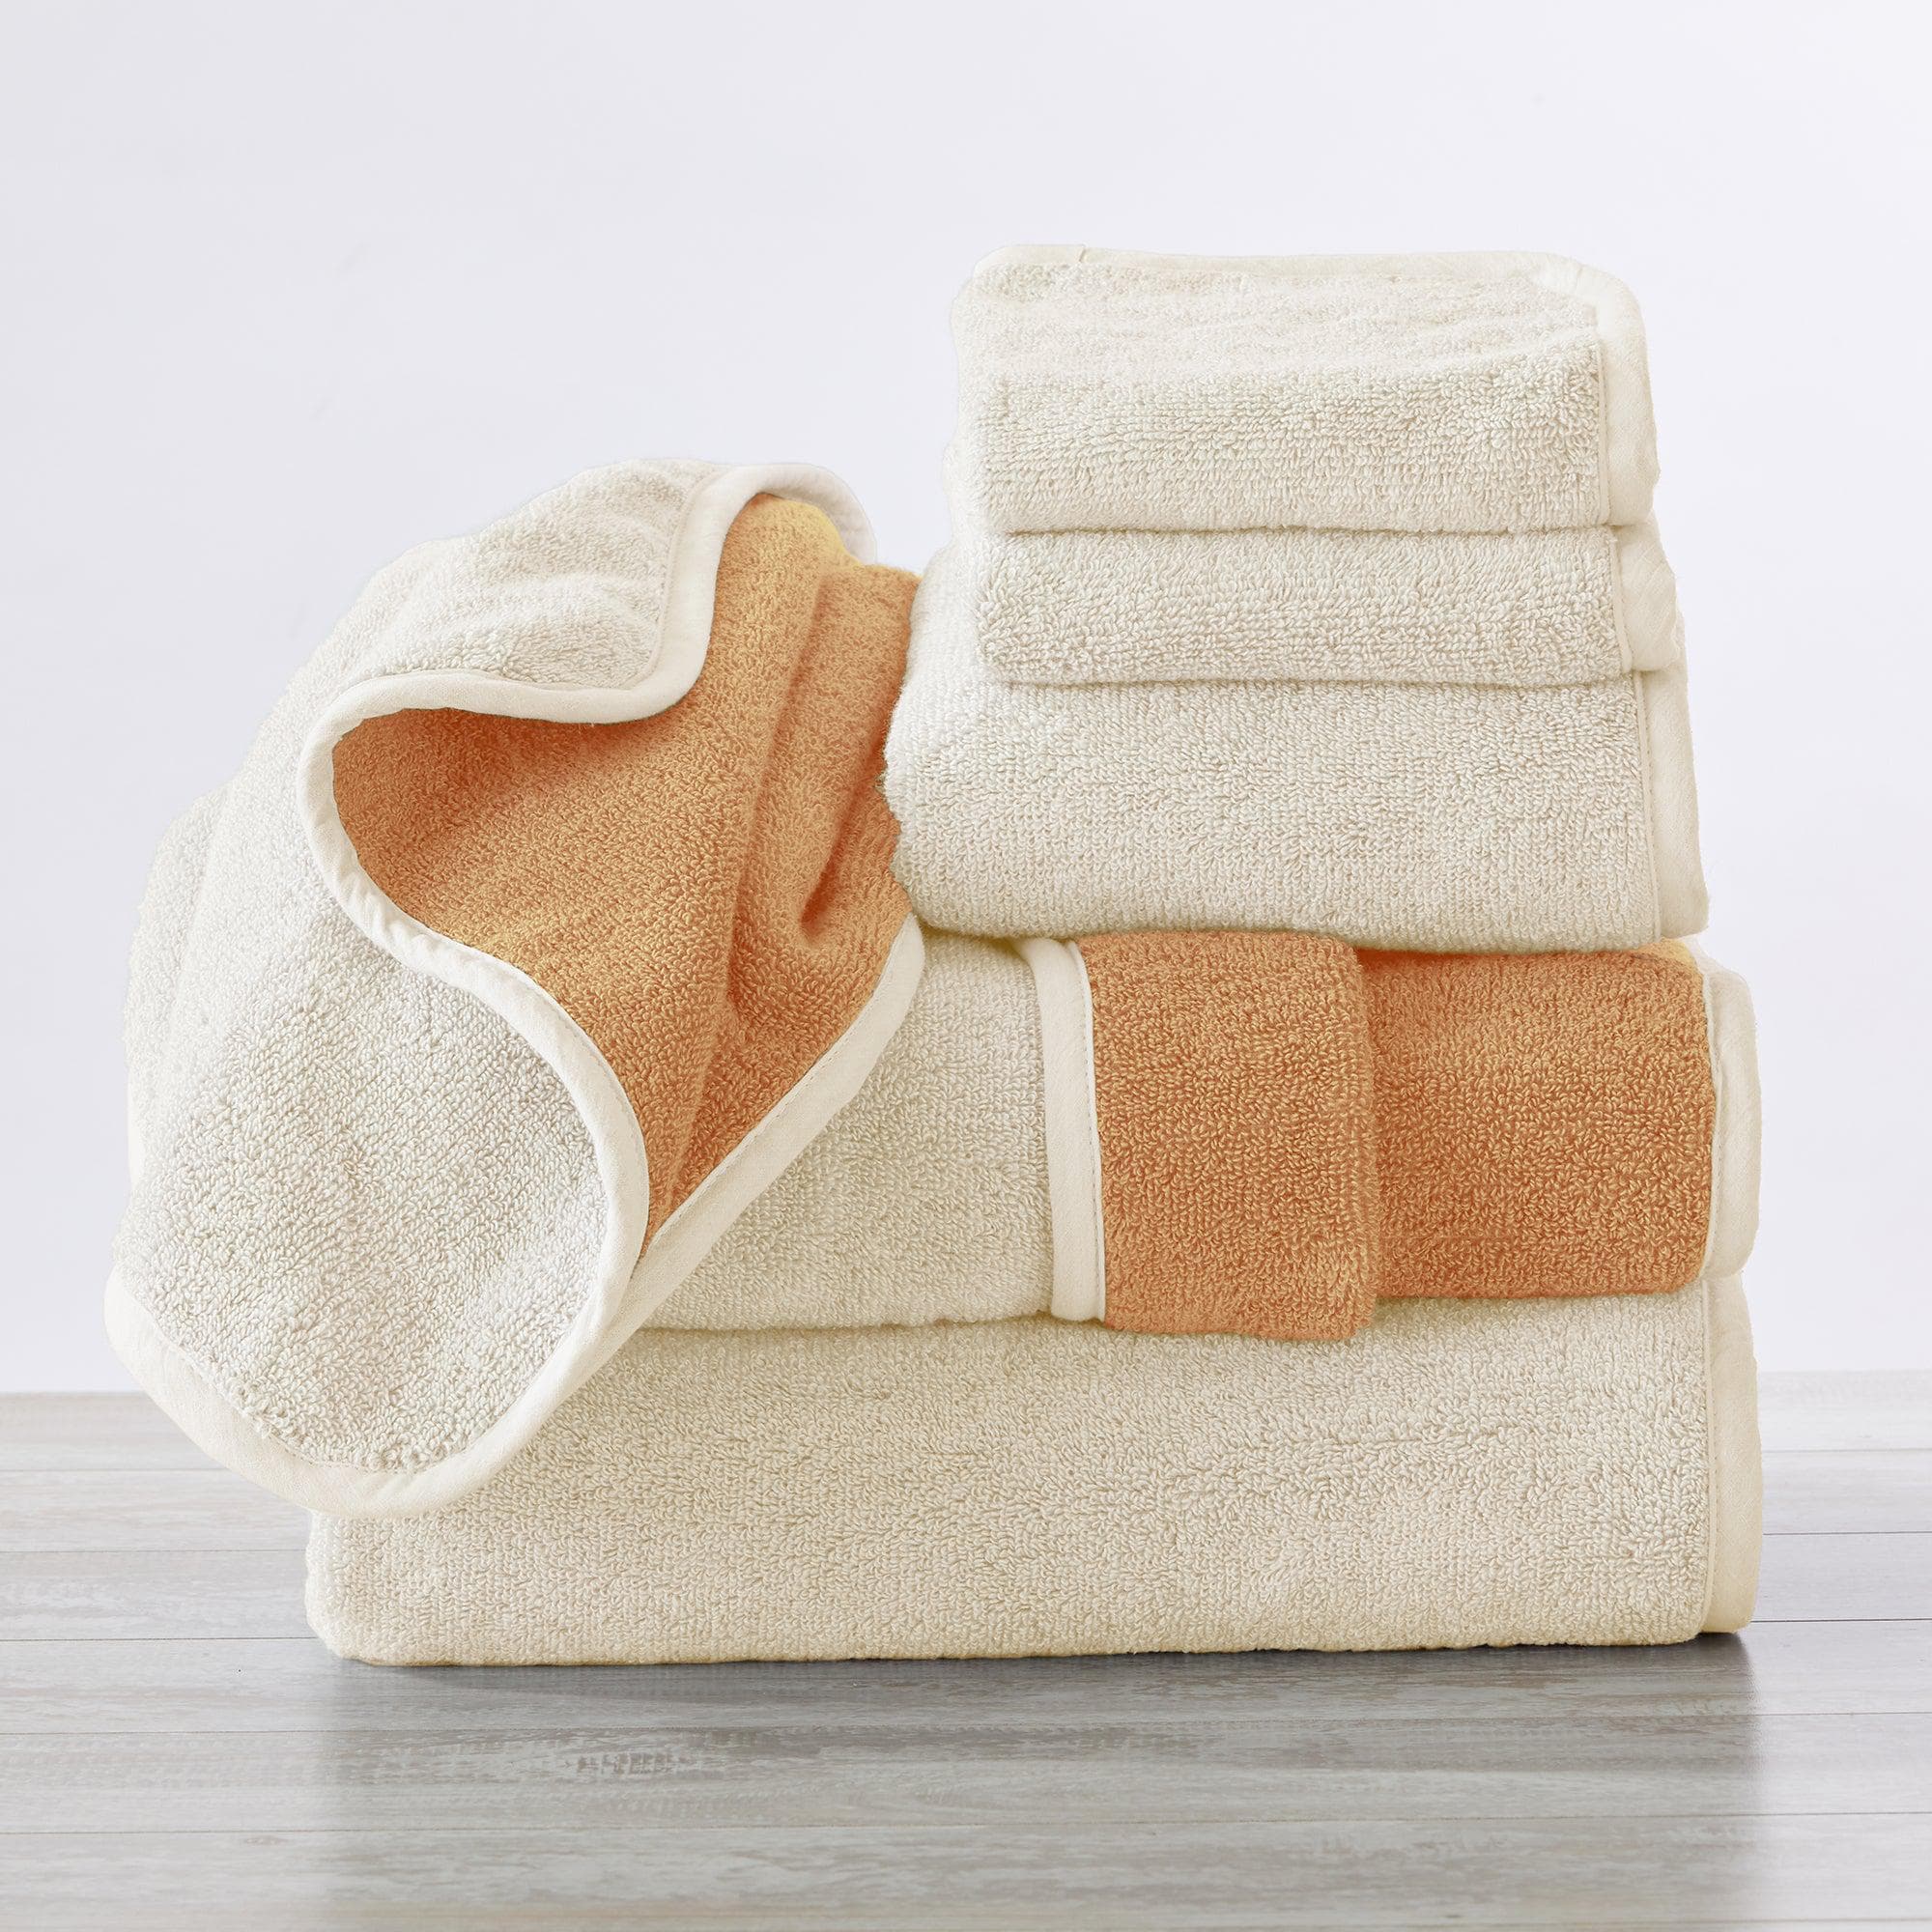 GOOD DEAL: 5 Piece Beige Bath Towel Set, 100% Combed Cotton Towels,  Shower Towel, 600 GSM Luxury Bath Towels, Plush and Absorbent Bathroom Towel  Set, (1 Bath Towel 2 Hand